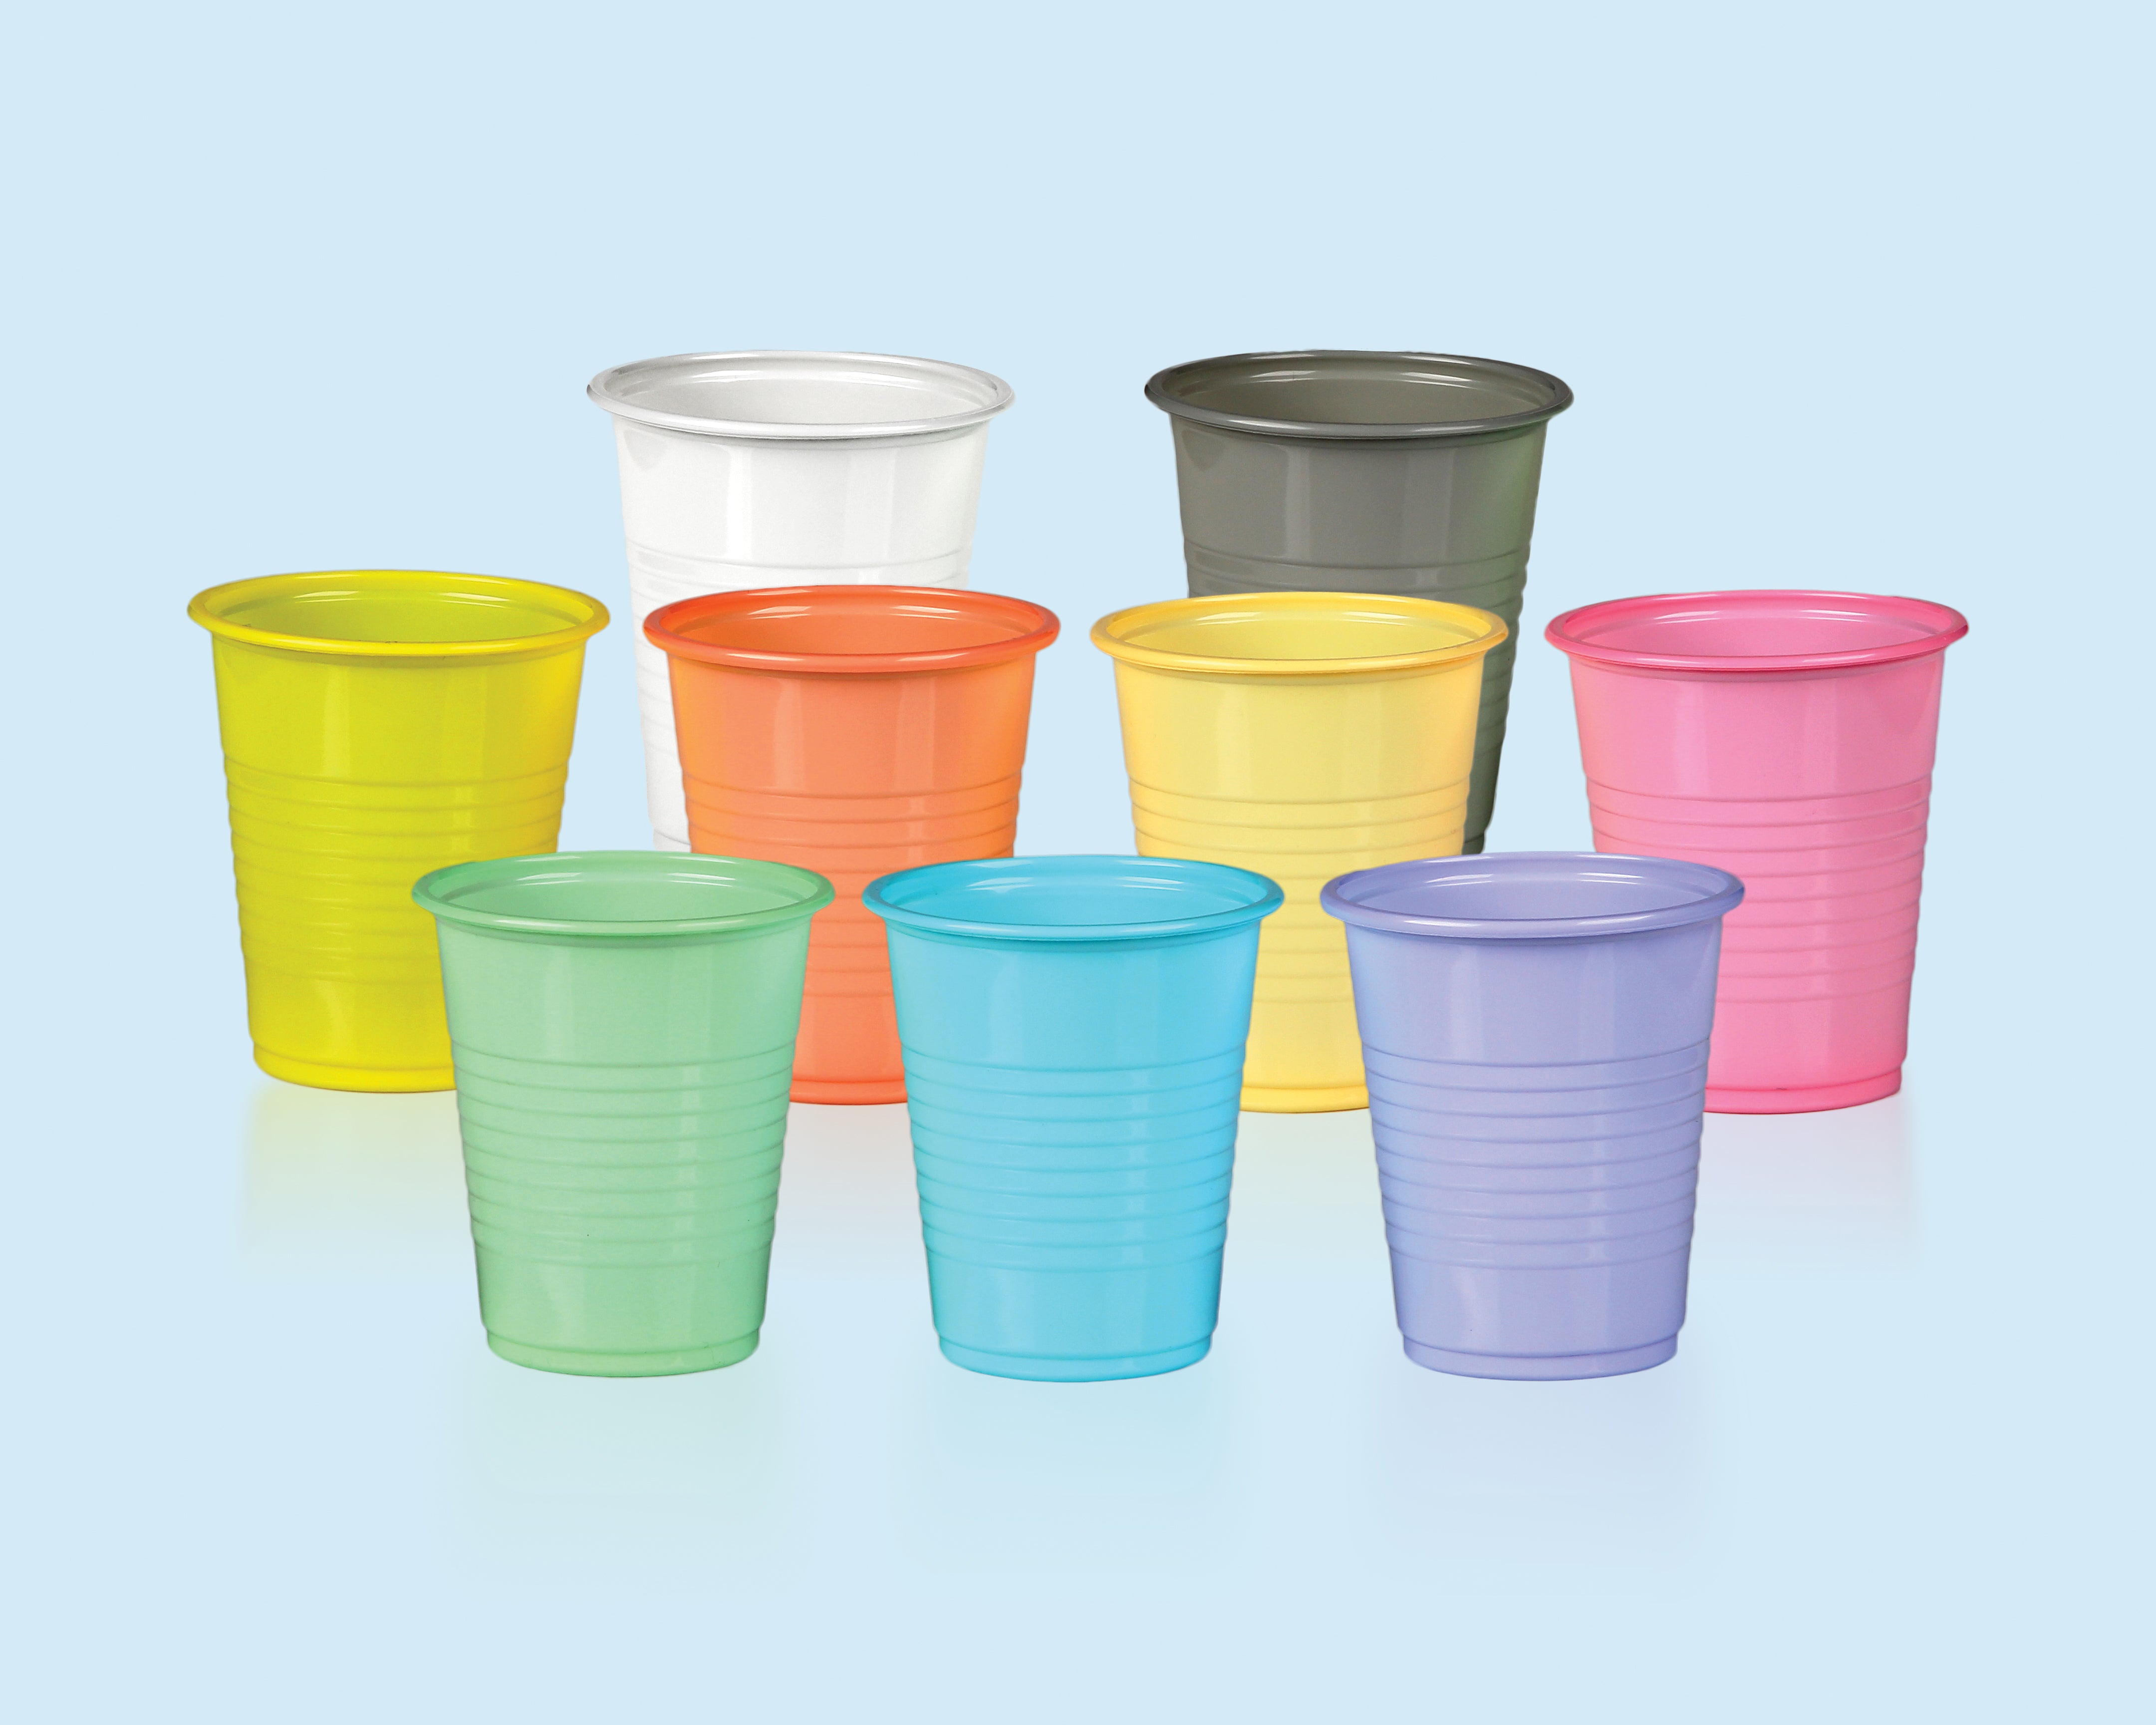 Plasdent Plastic Cups